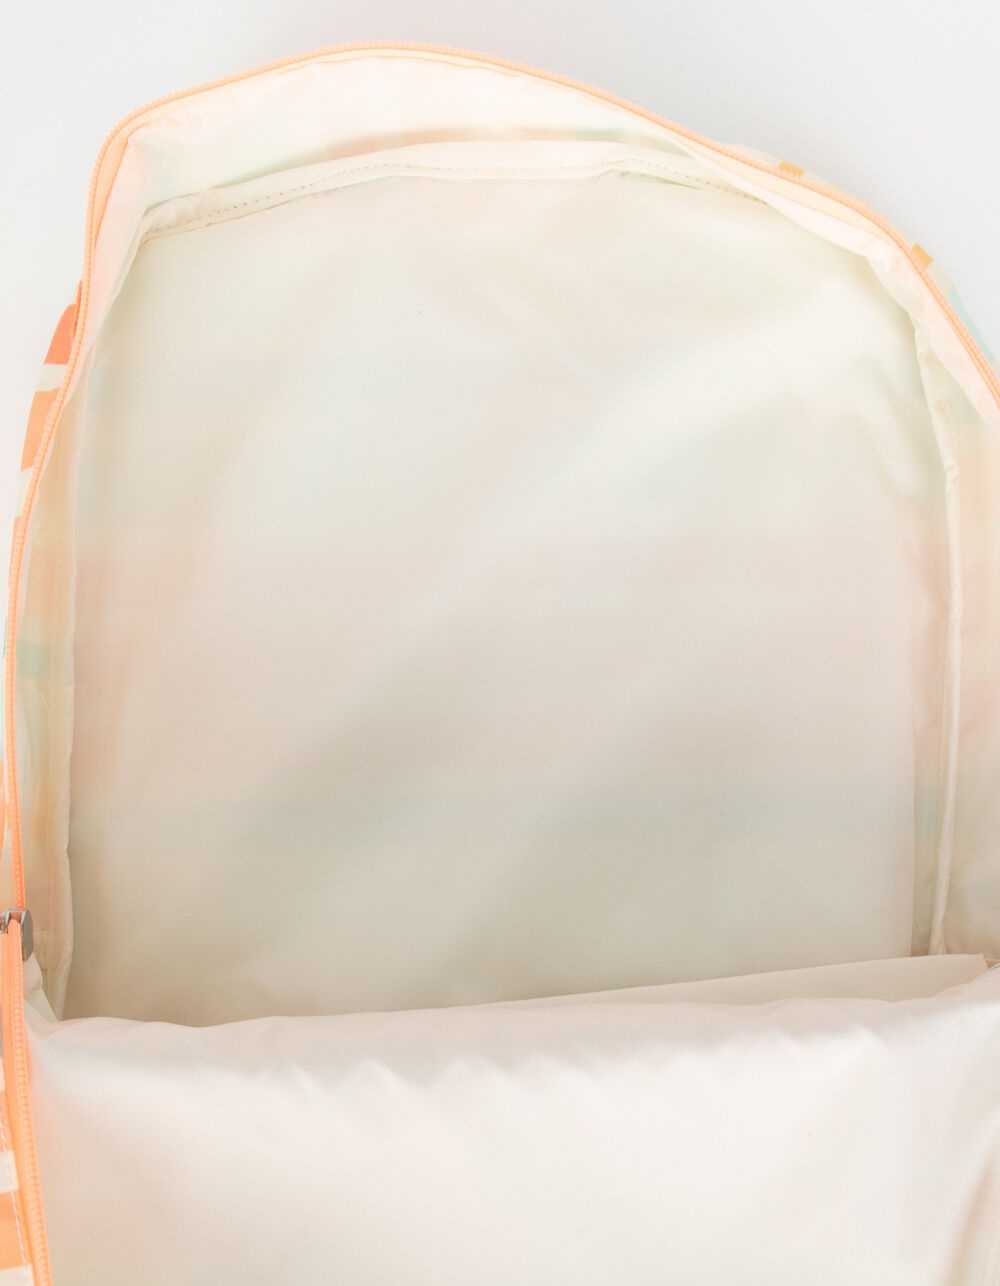 Pura Vida Leopard Mini Daypack Backpack Travel Bag - 400D Polyester, 12 Liters